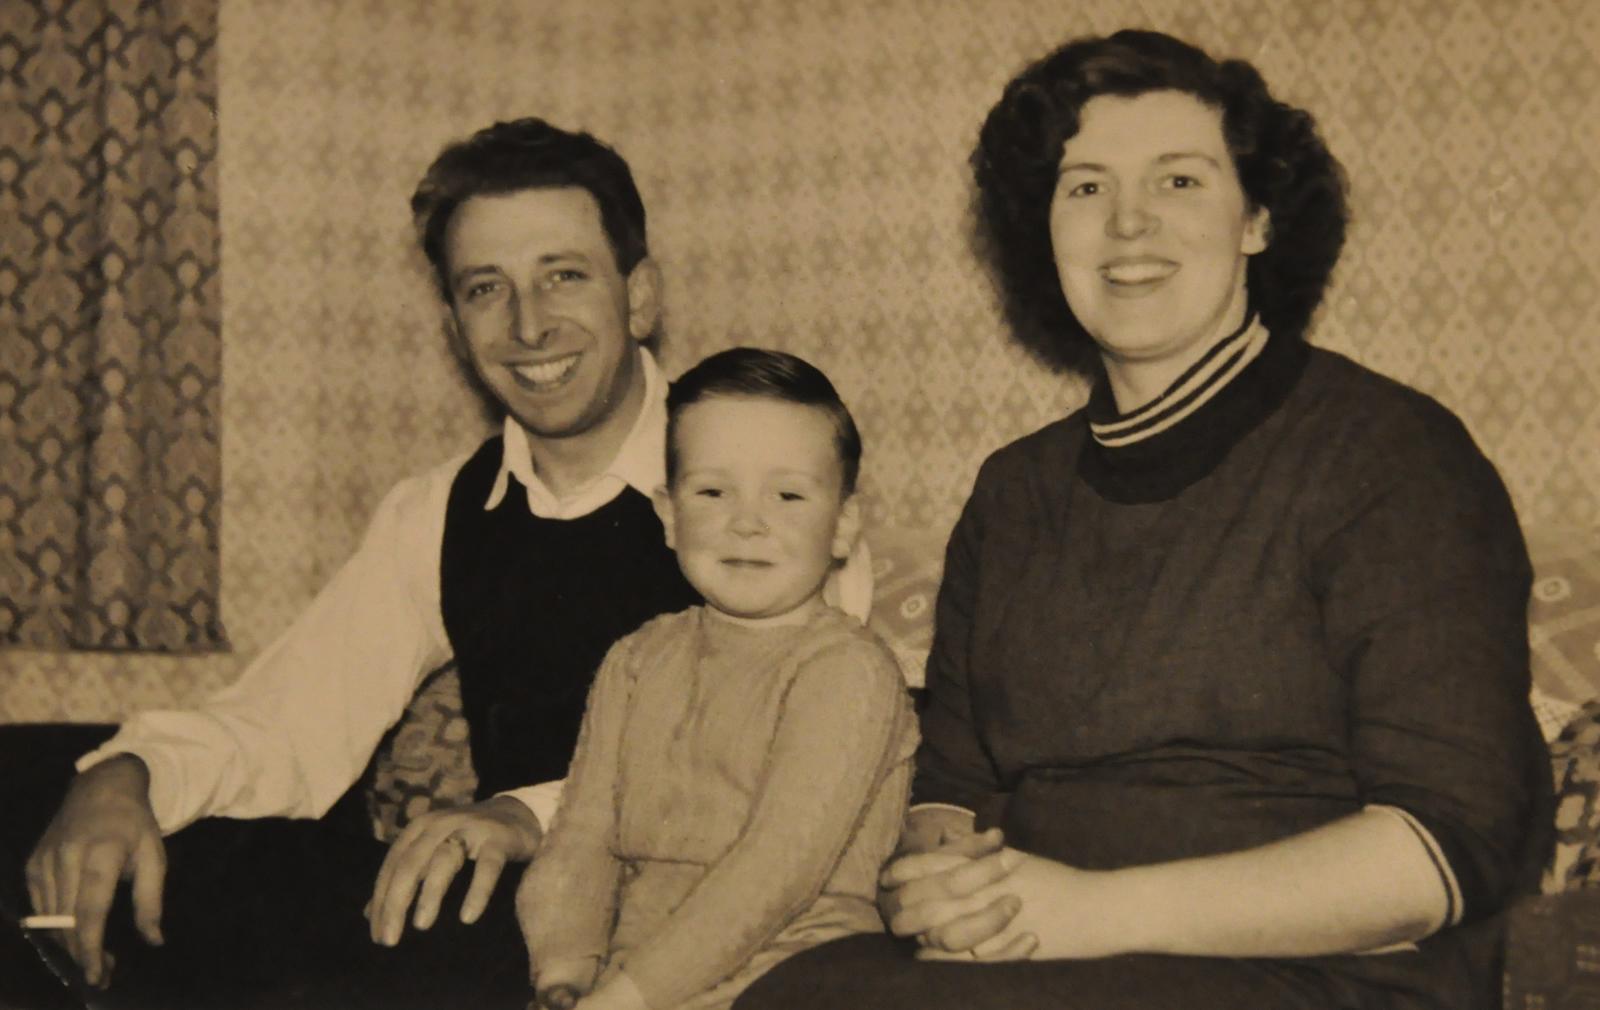 Dad, Geoff, and Mum